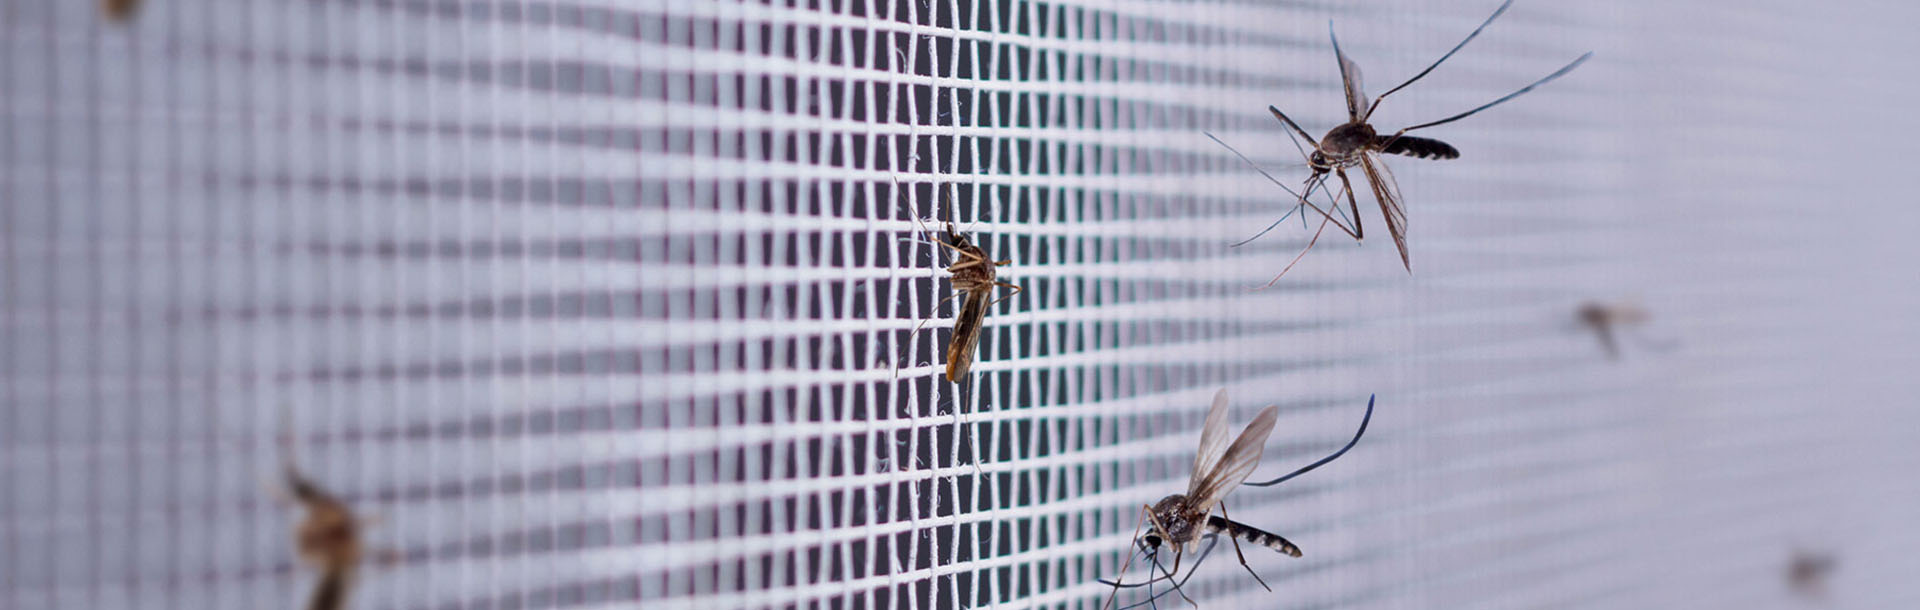 Mücken an Insektenschutznetz am Fenster